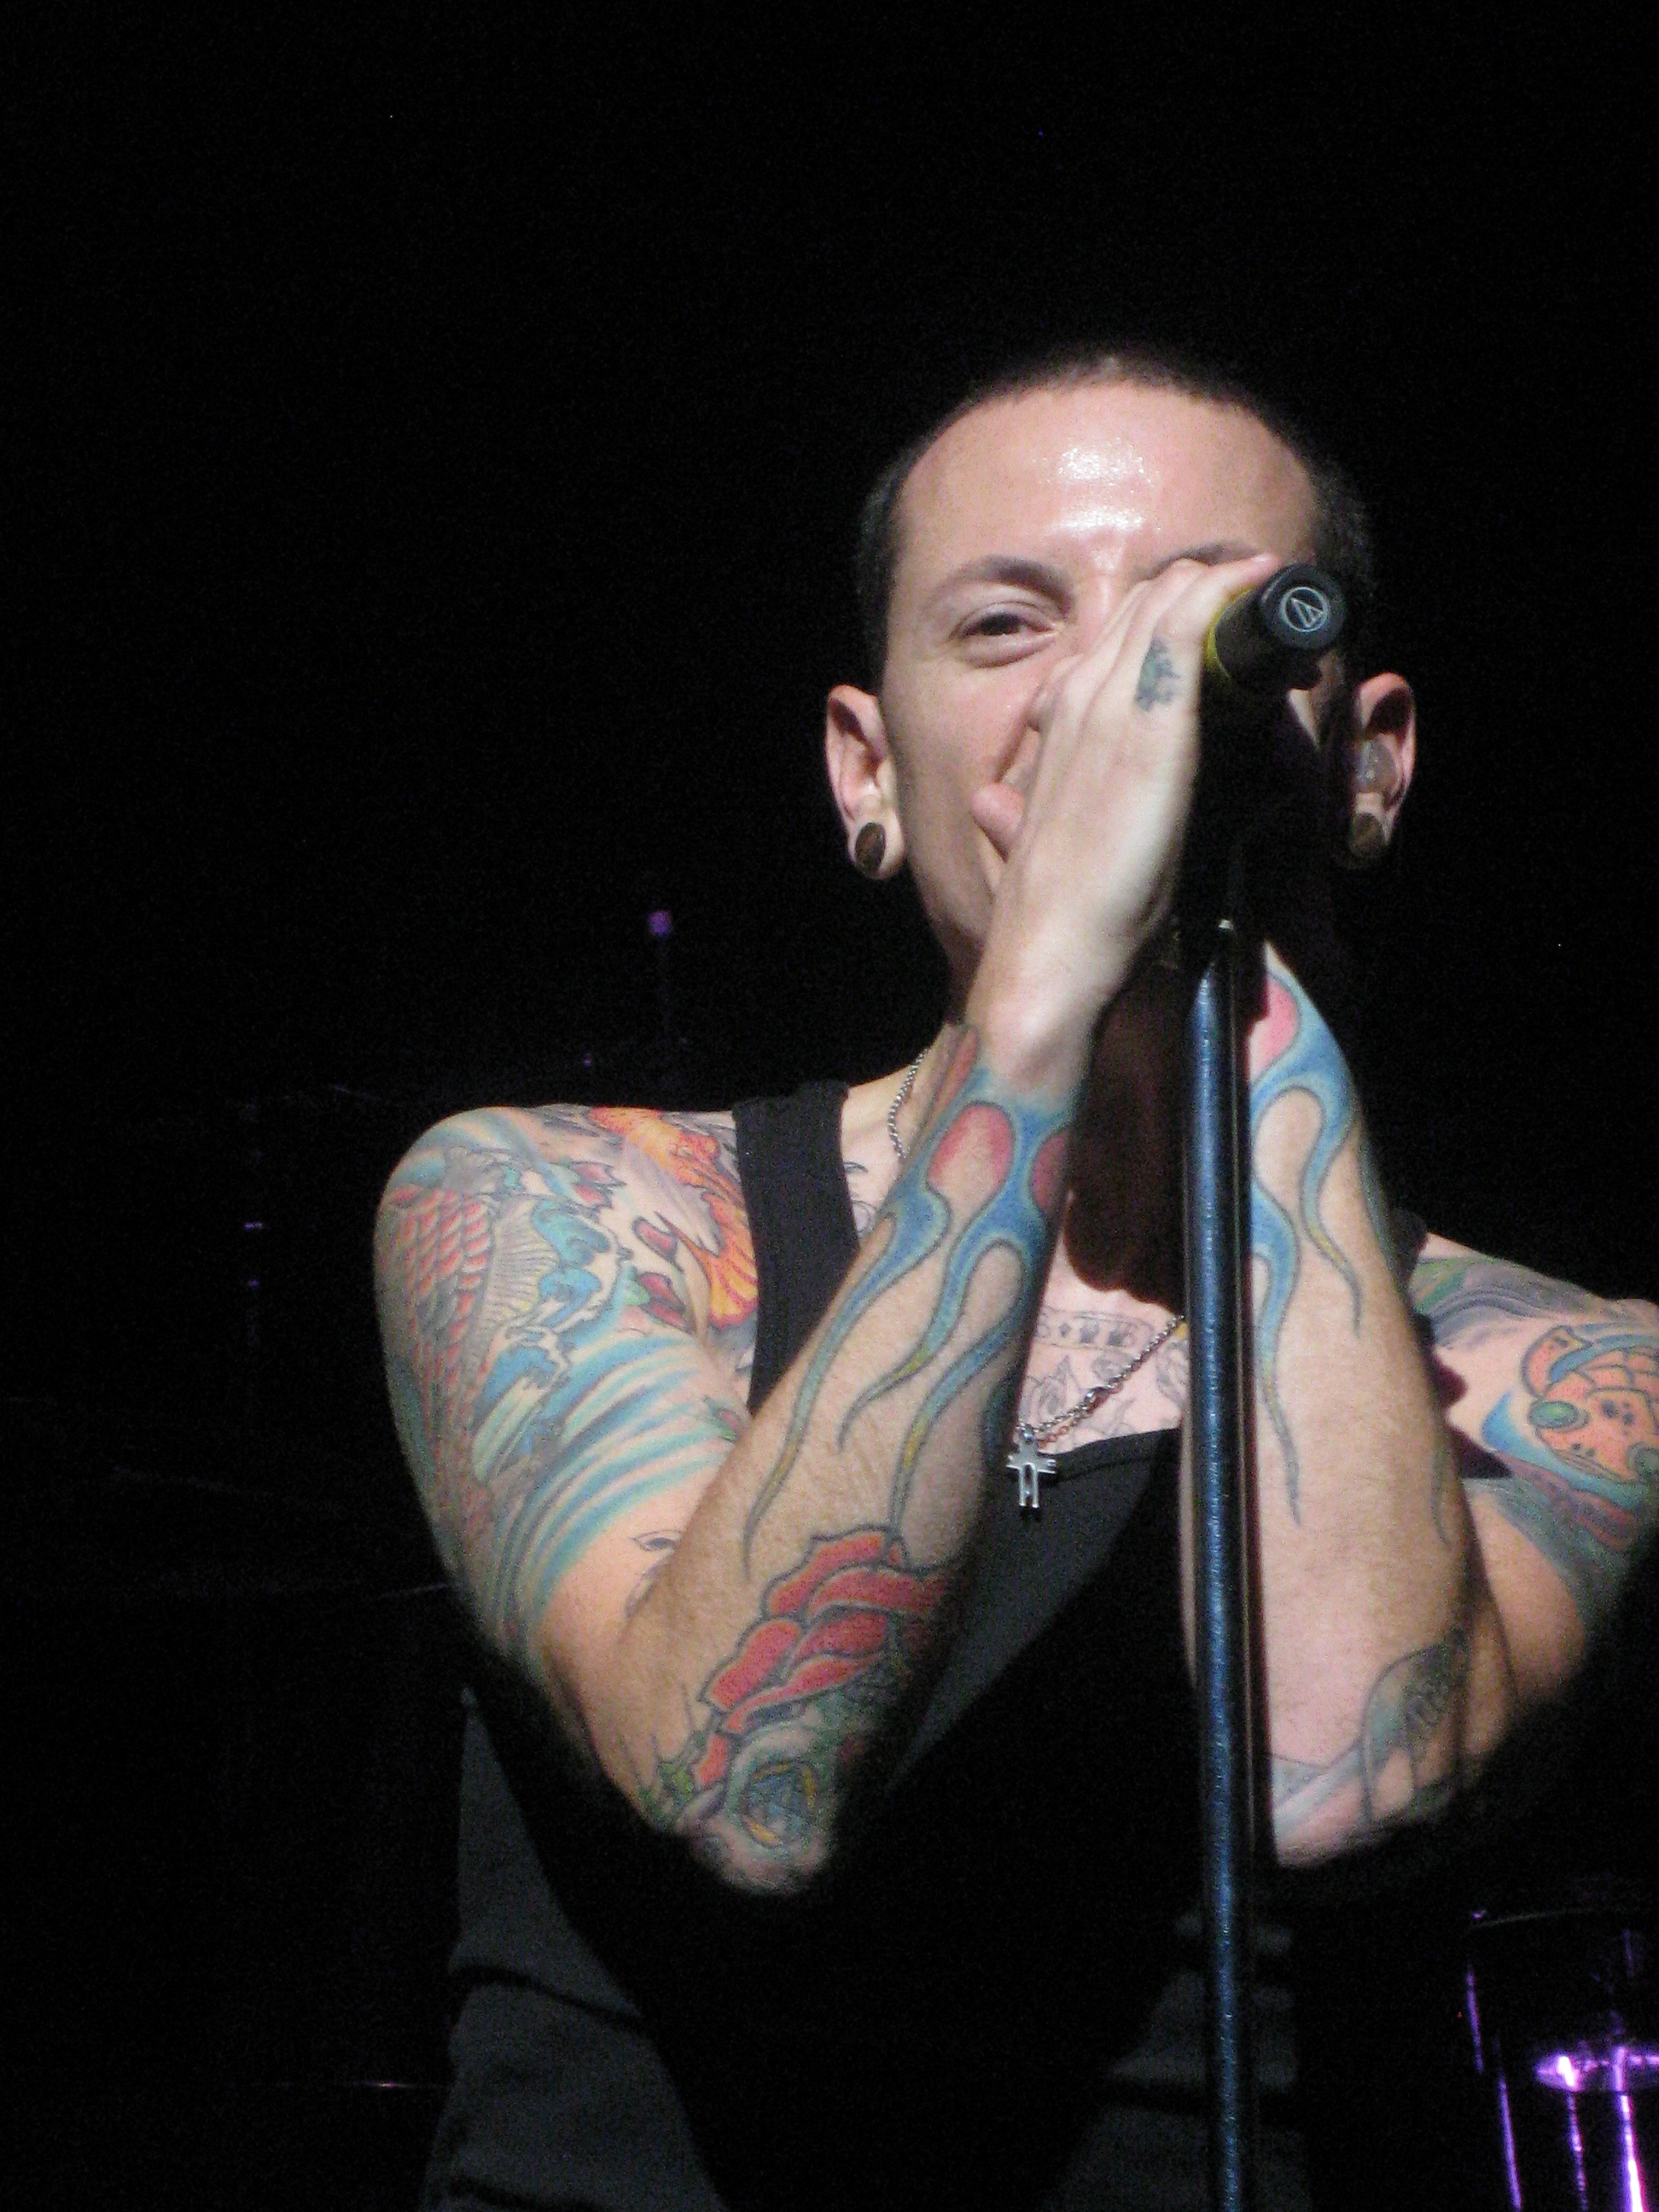 File:Linkin Park 2017 logo after Bennington's death.svg - Wikimedia Commons